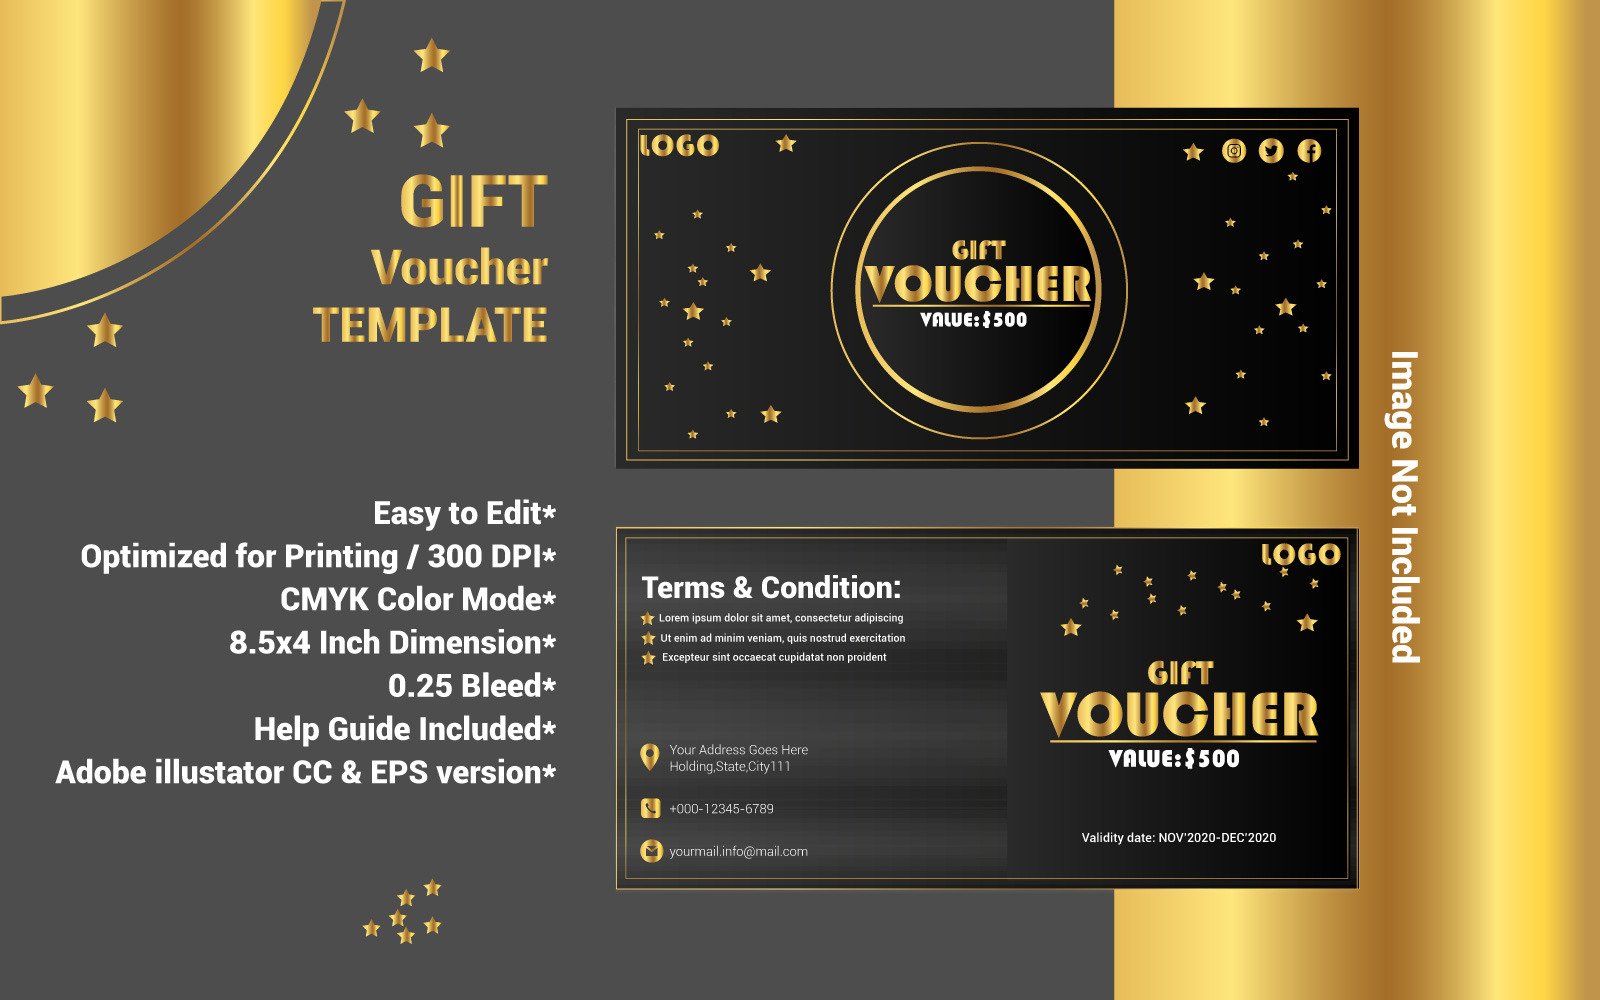 Gift Voucher Template - Vector Image - TemplateMonster